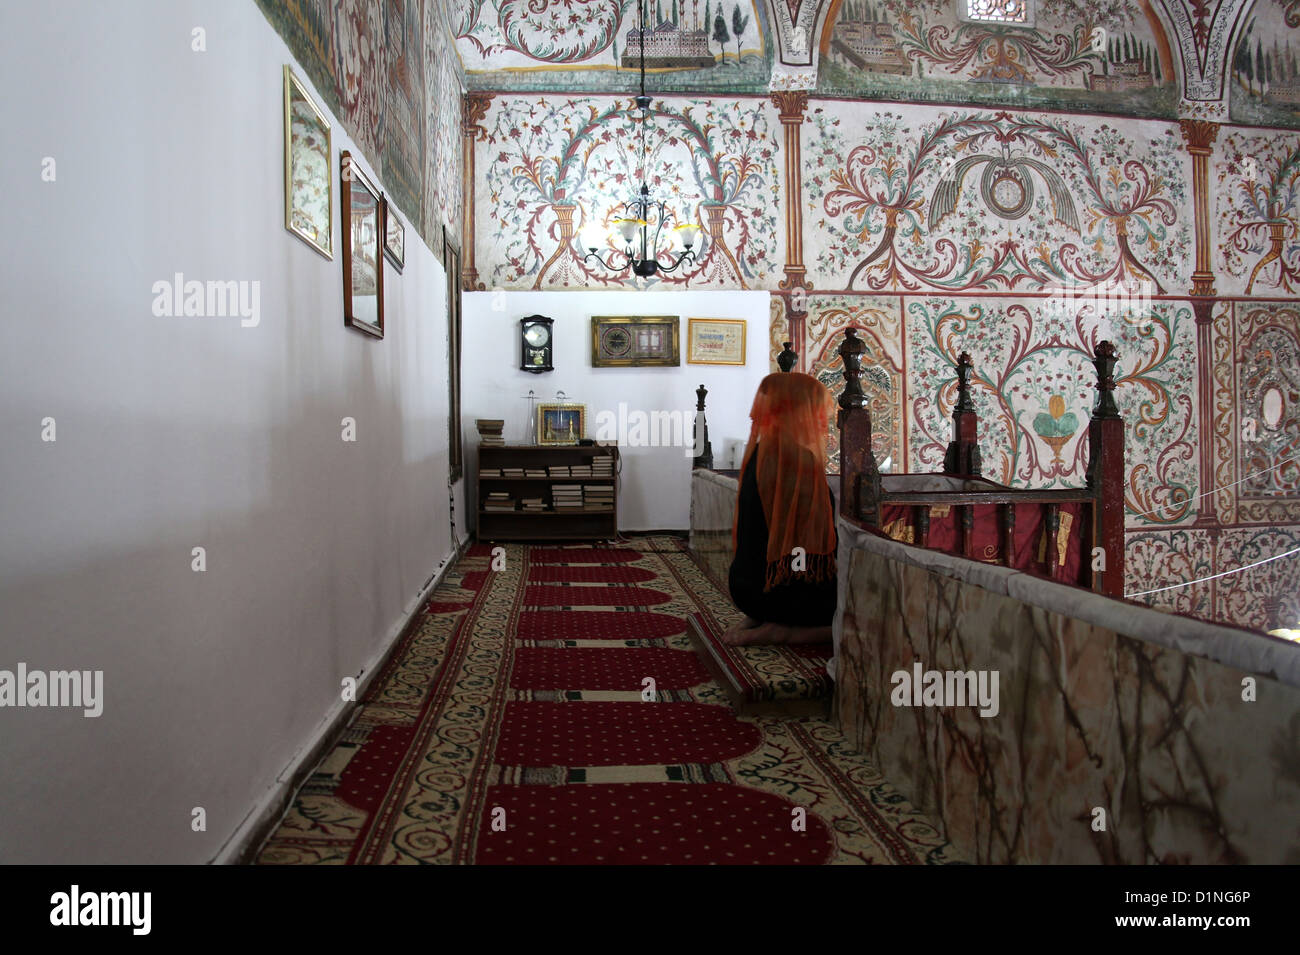 Woman Praying inside the Et'hem Bey Mosque in Tirana Stock Photo